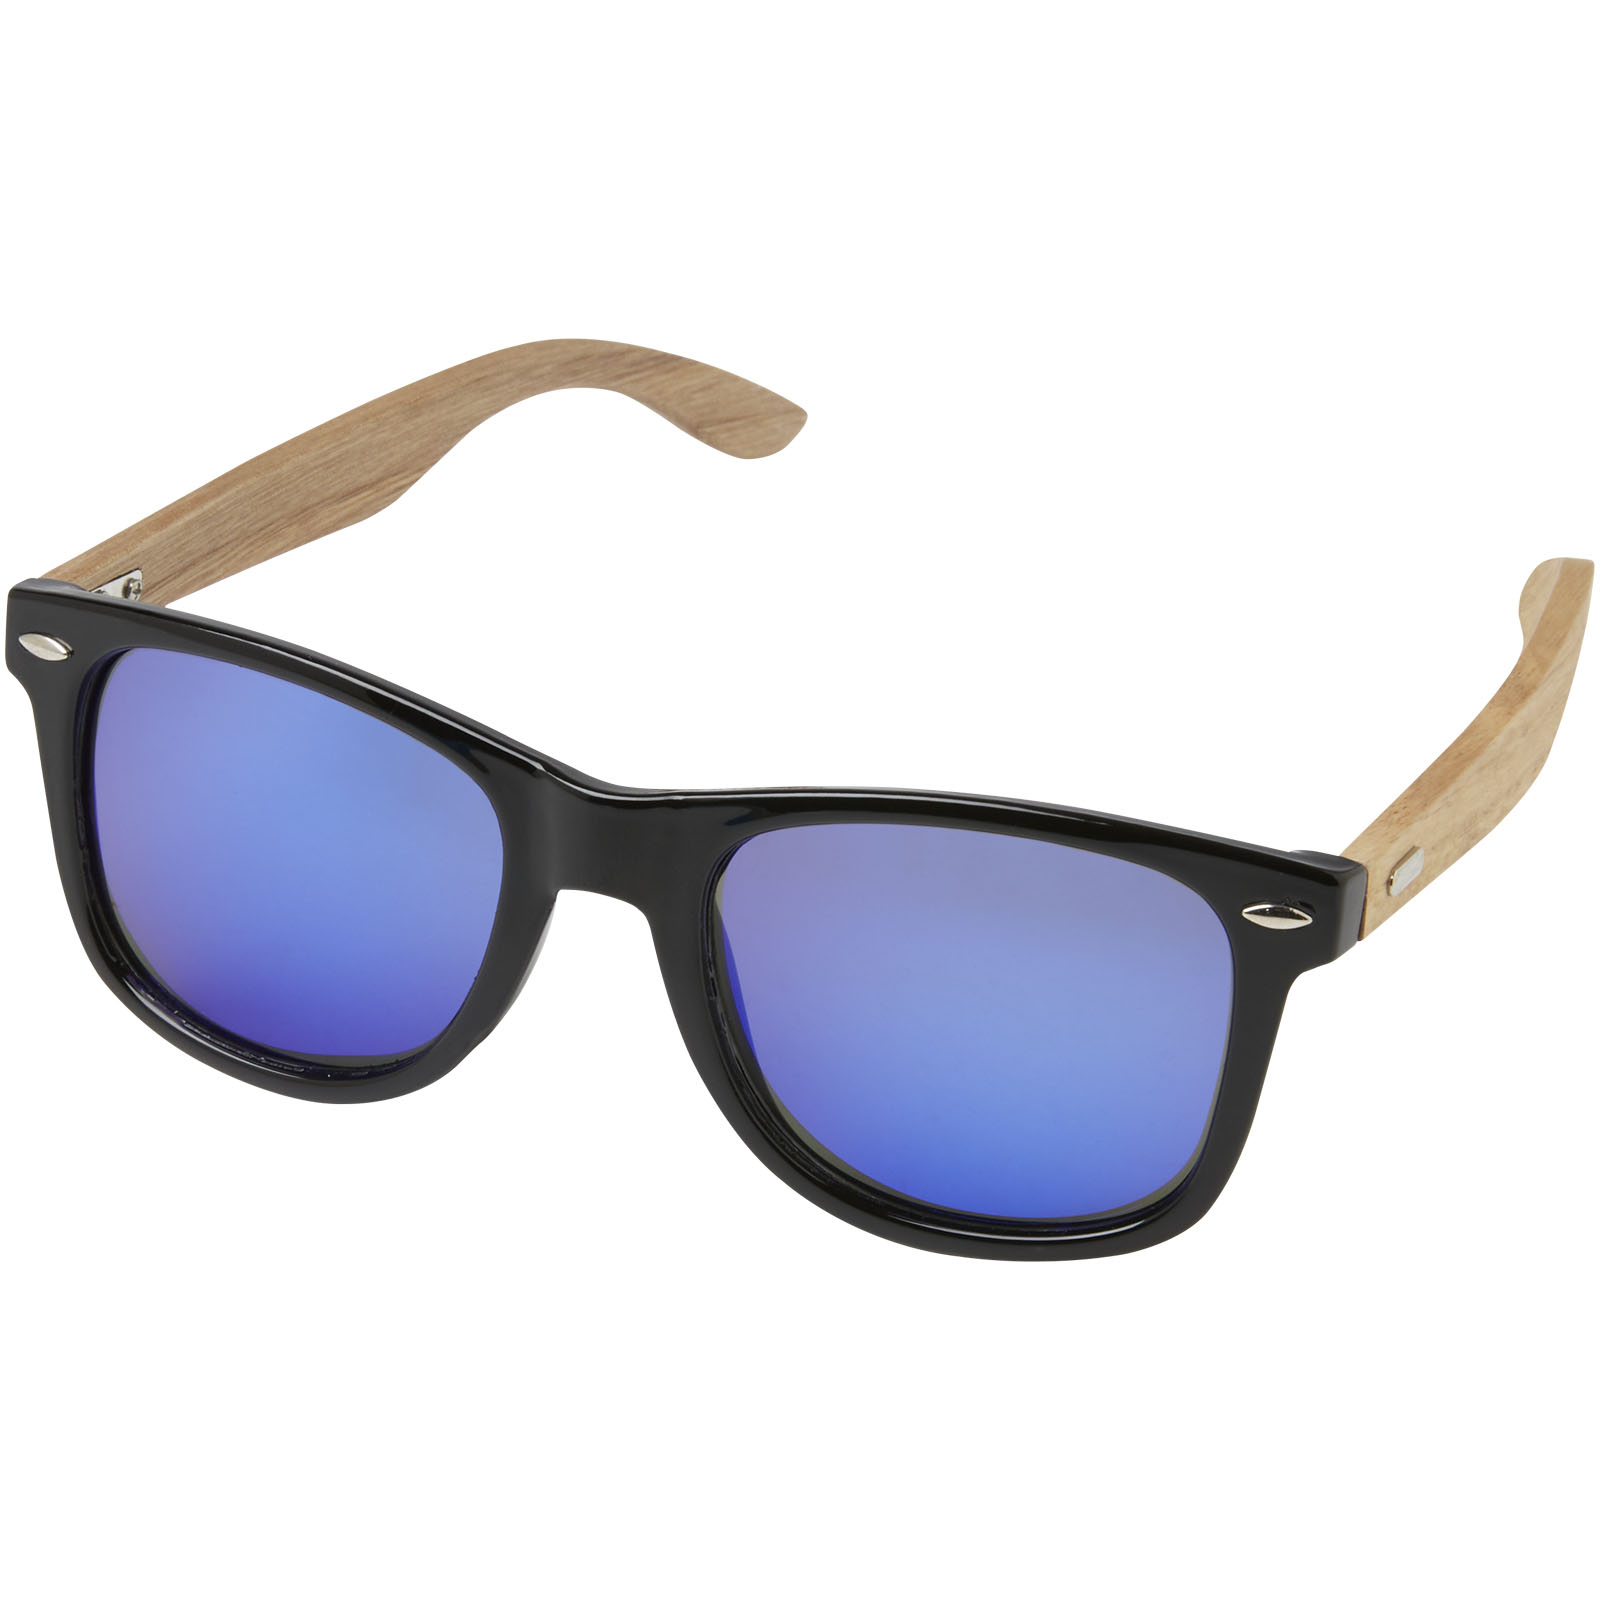 Sports & Leisure - Hiru rPET/wood mirrored polarized sunglasses in gift box